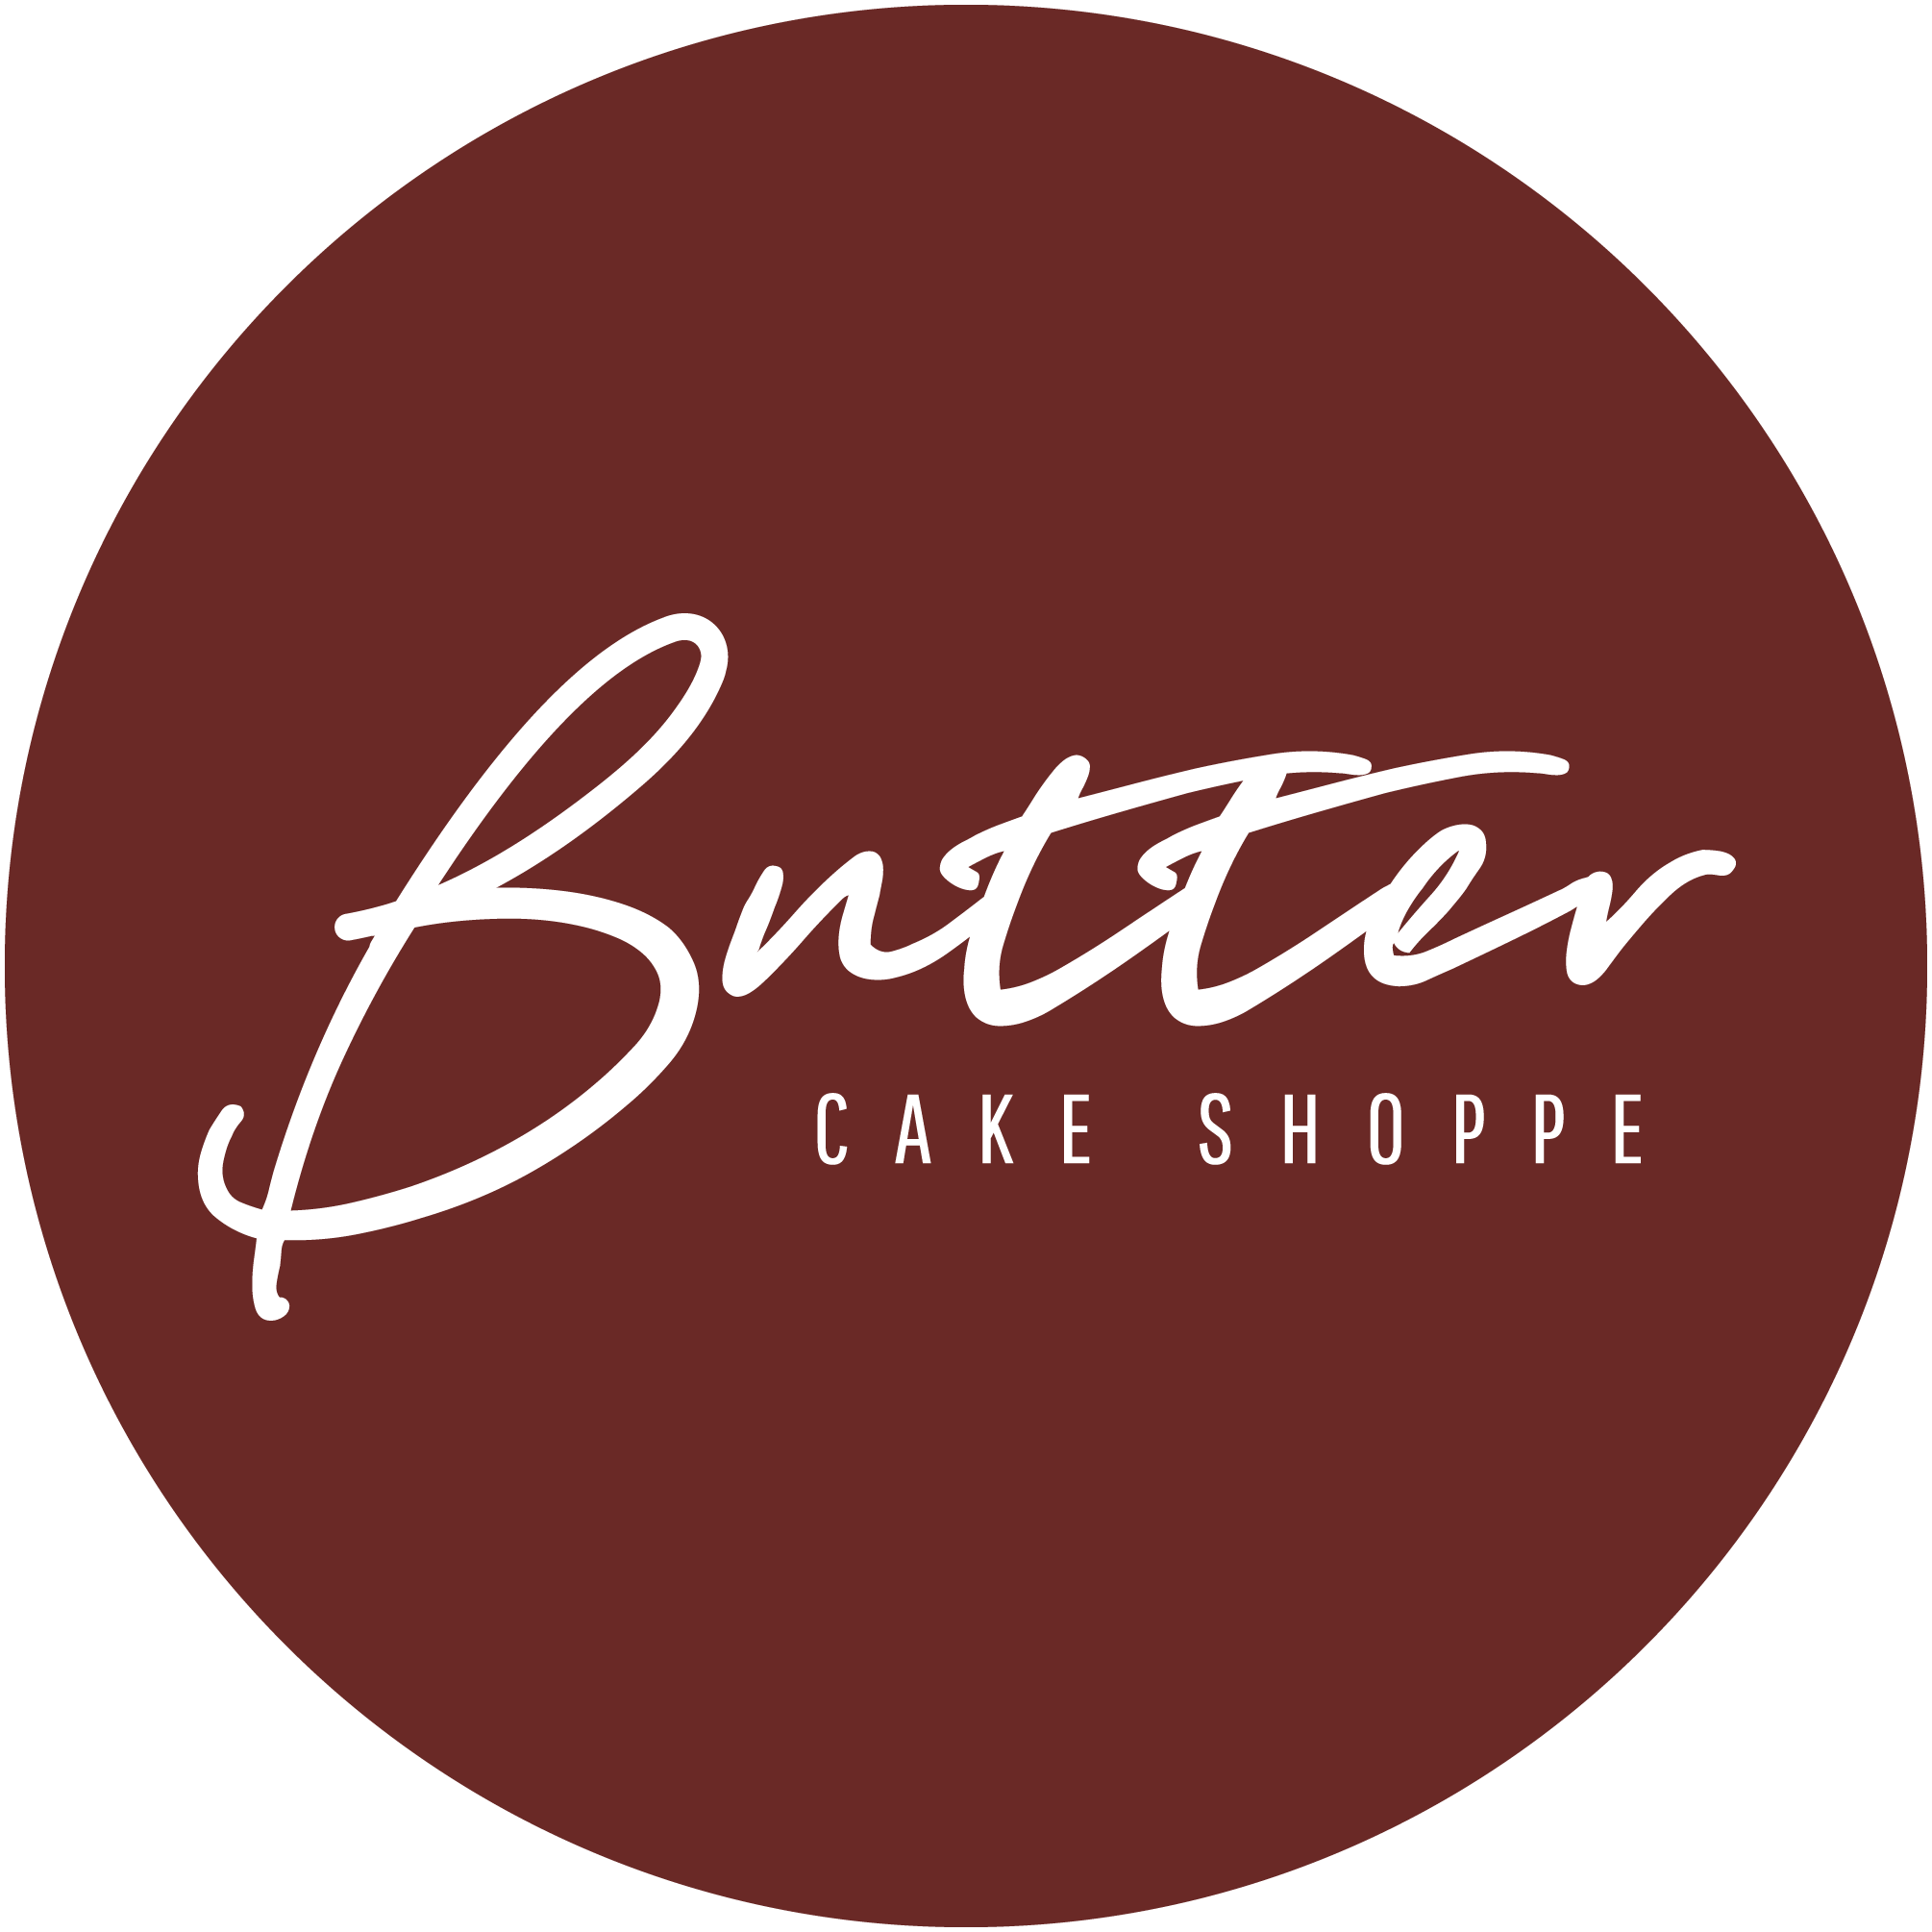 Top 10 Cake Shops in Dubai - Hummingbird, Magnolia & More - MyBayut